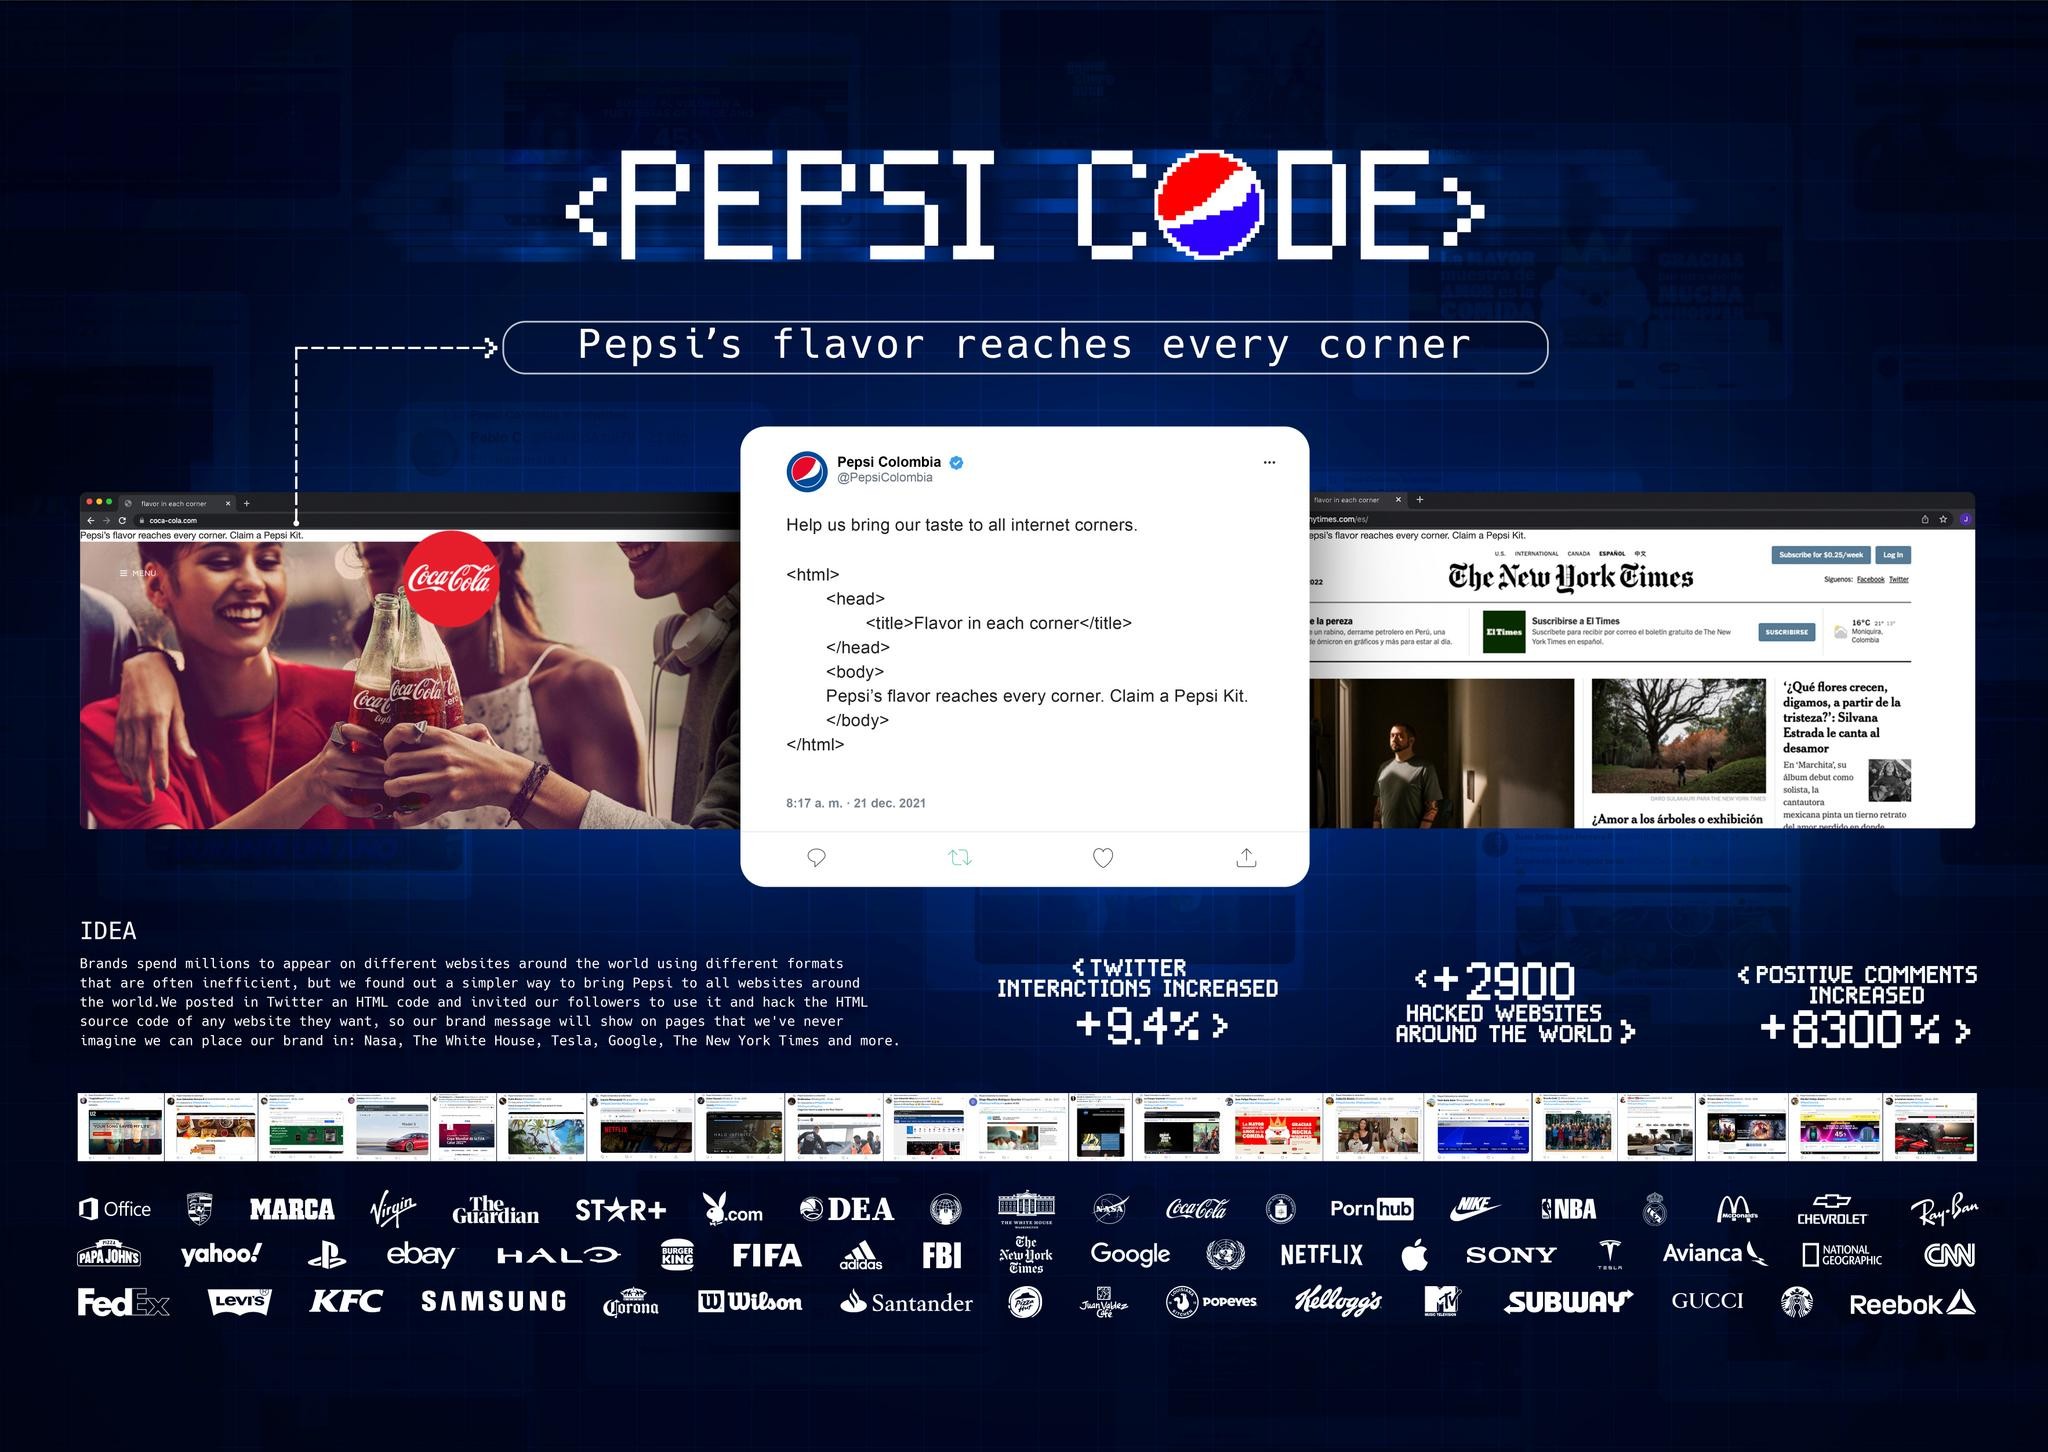 Pepsi Code